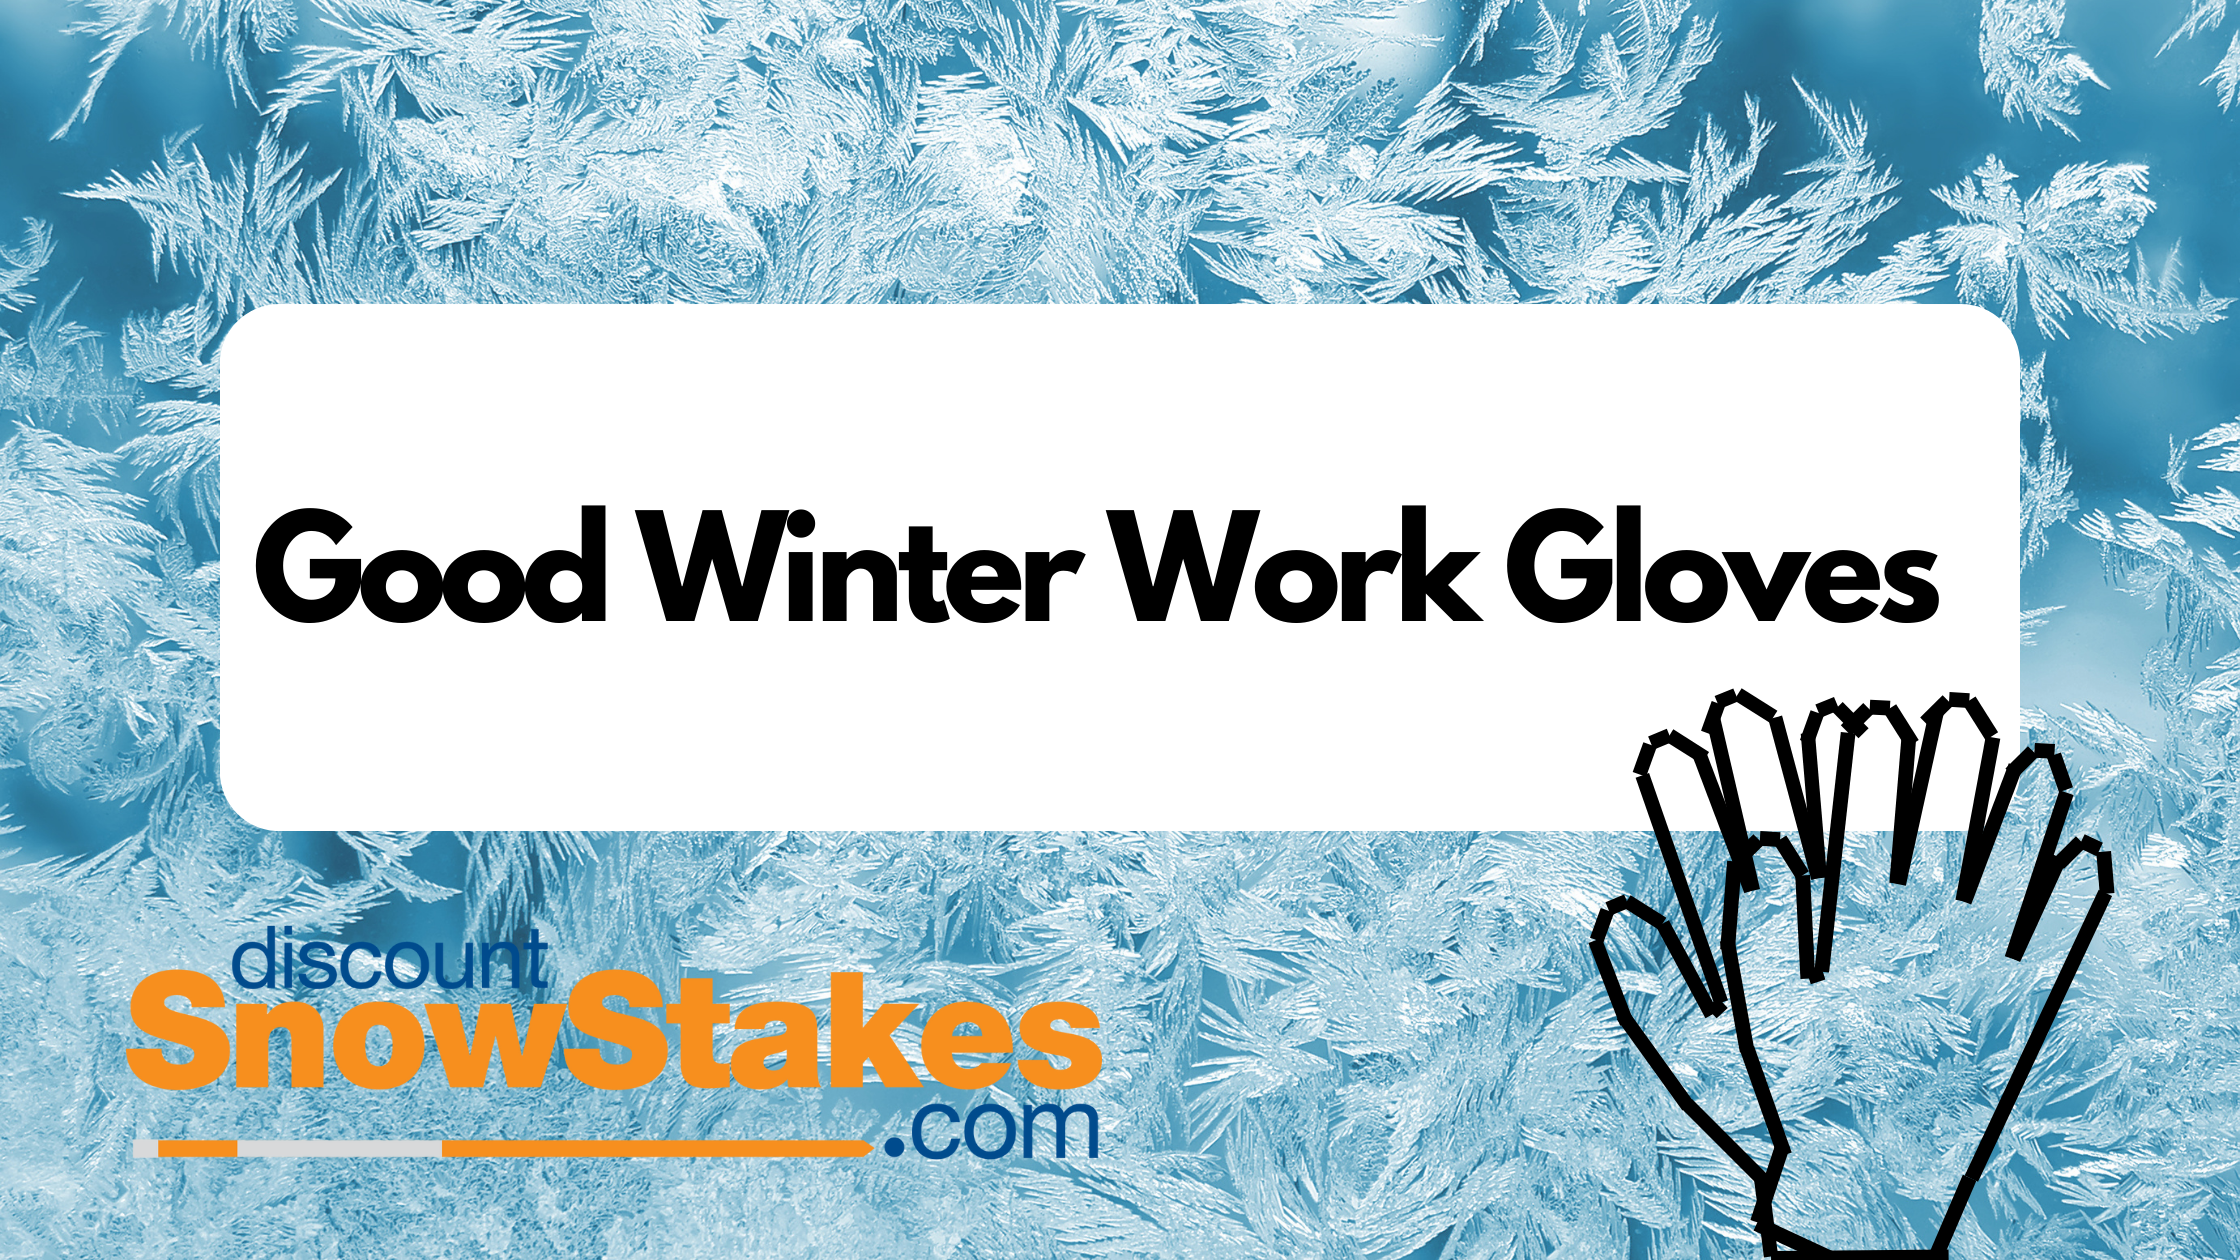 What Makes A Good Winter Work Glove?